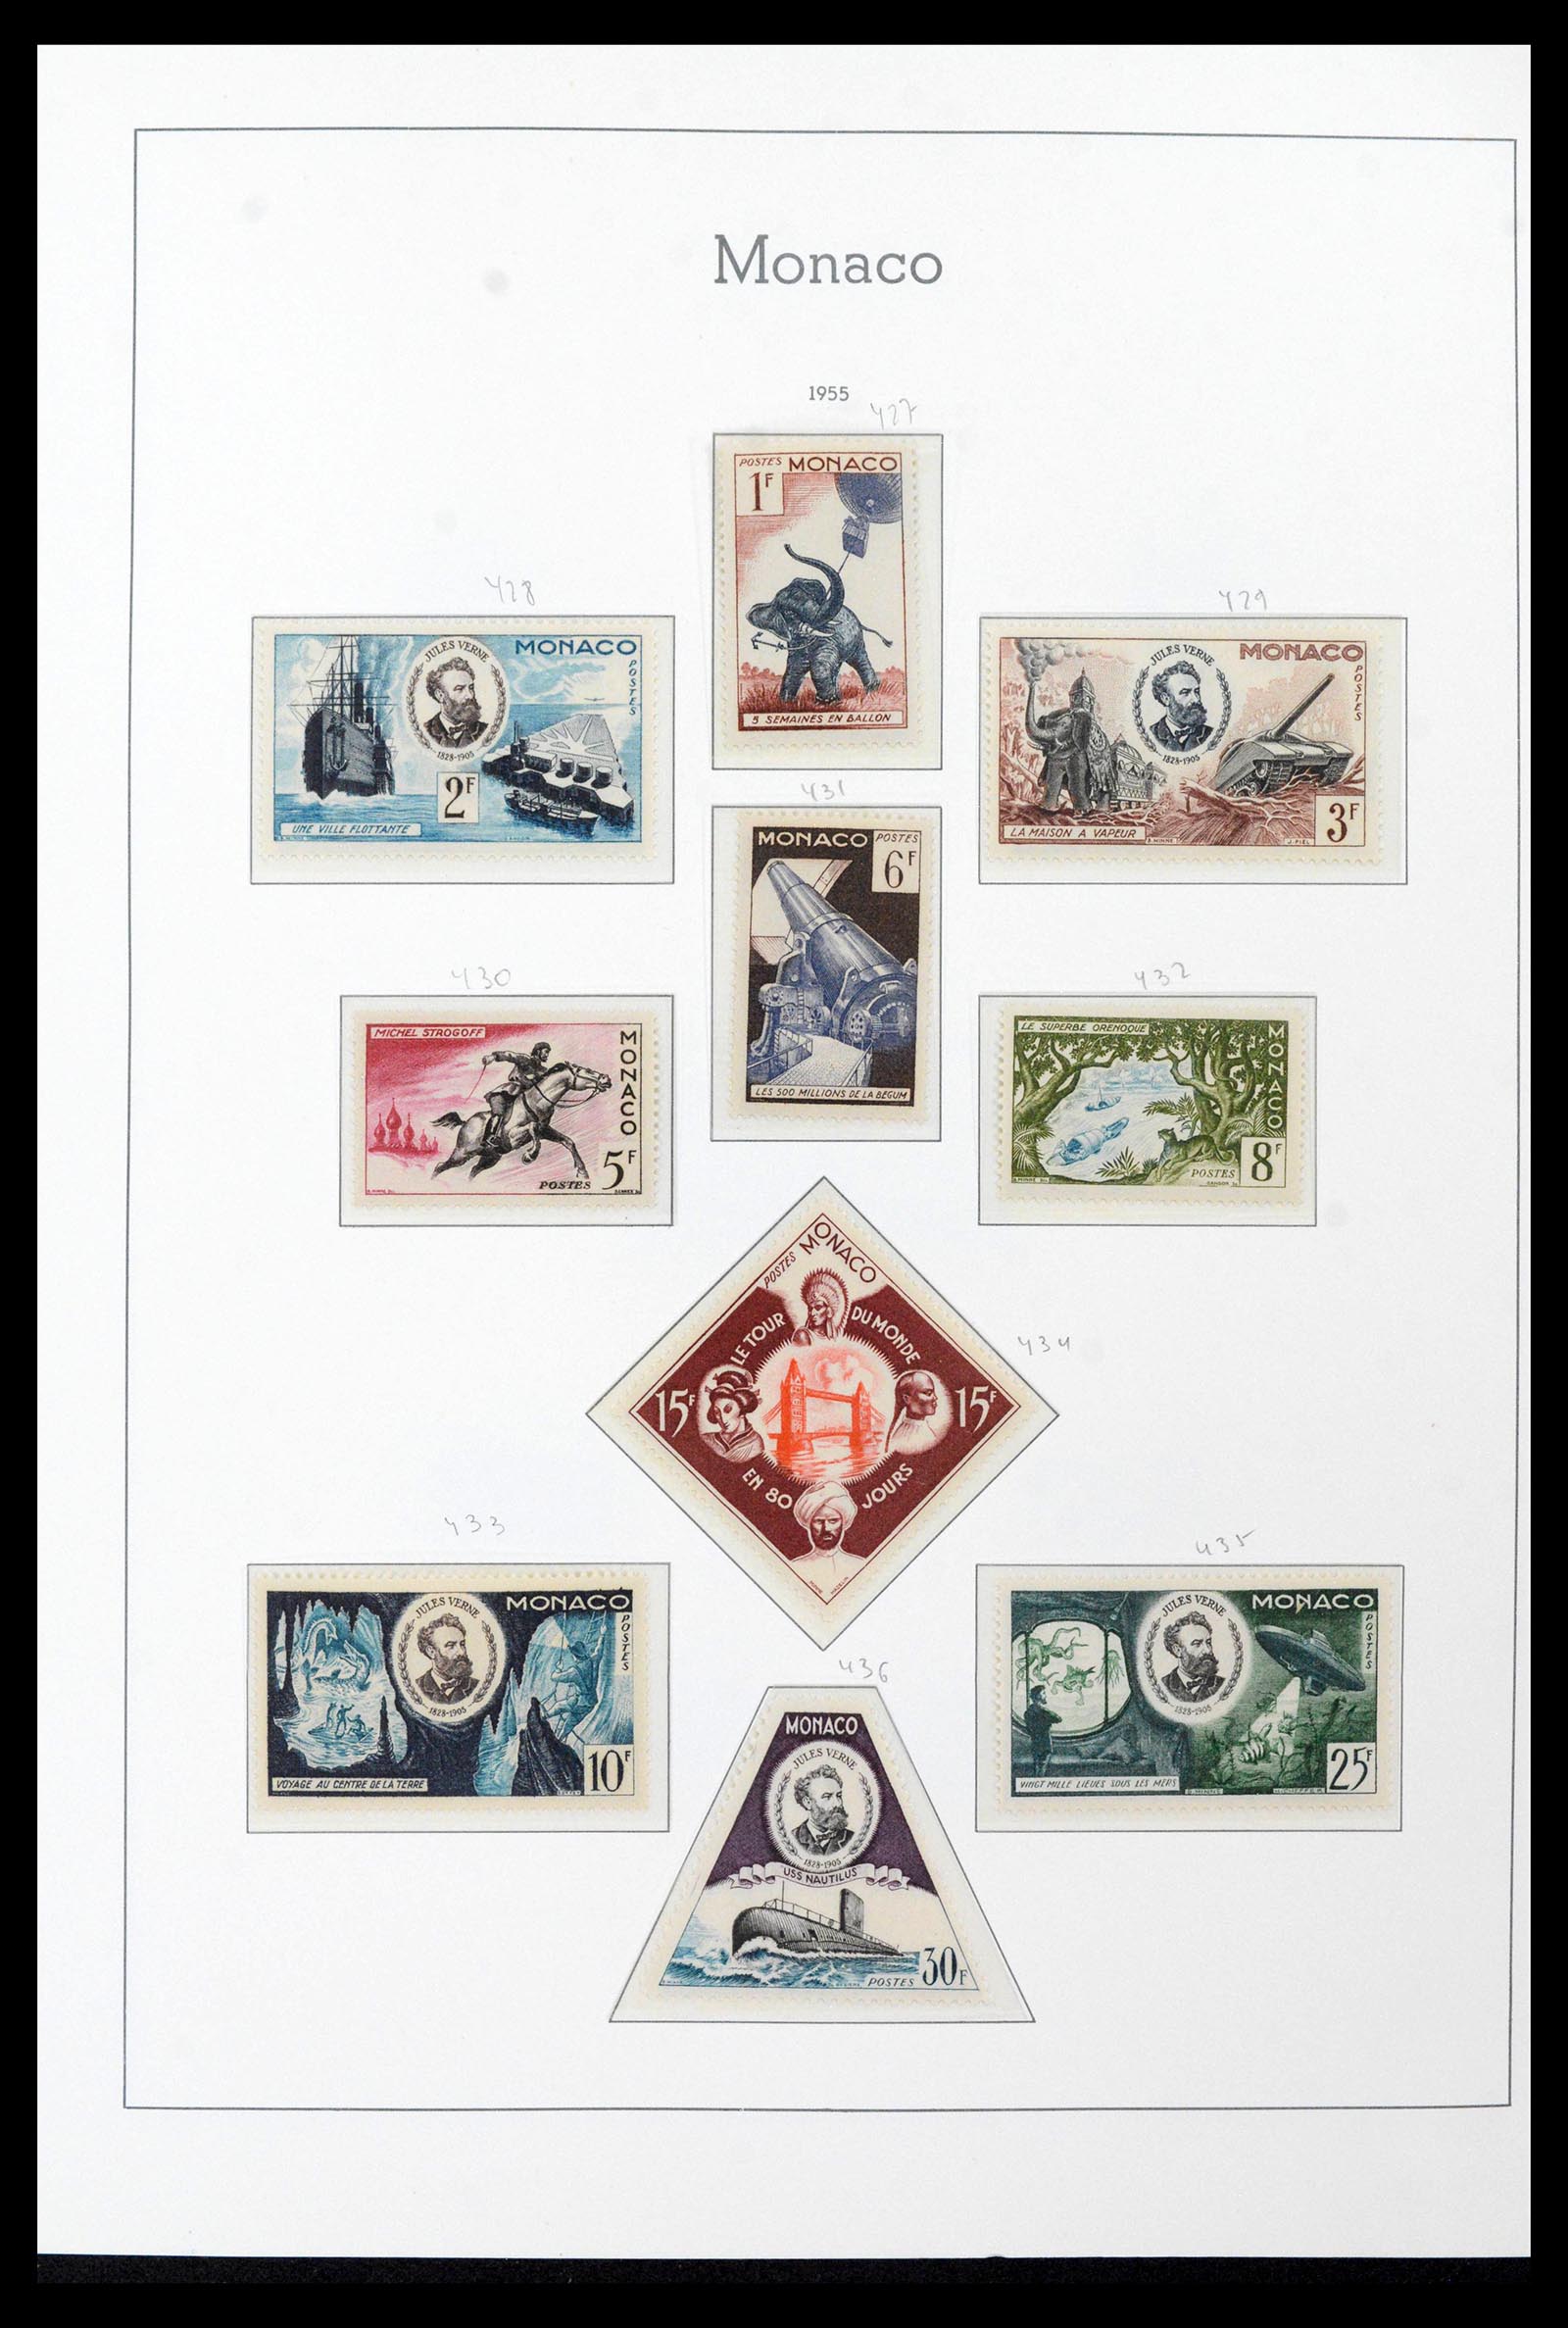 39250 0056 - Stamp collection 39250 Monaco 1885-1995.